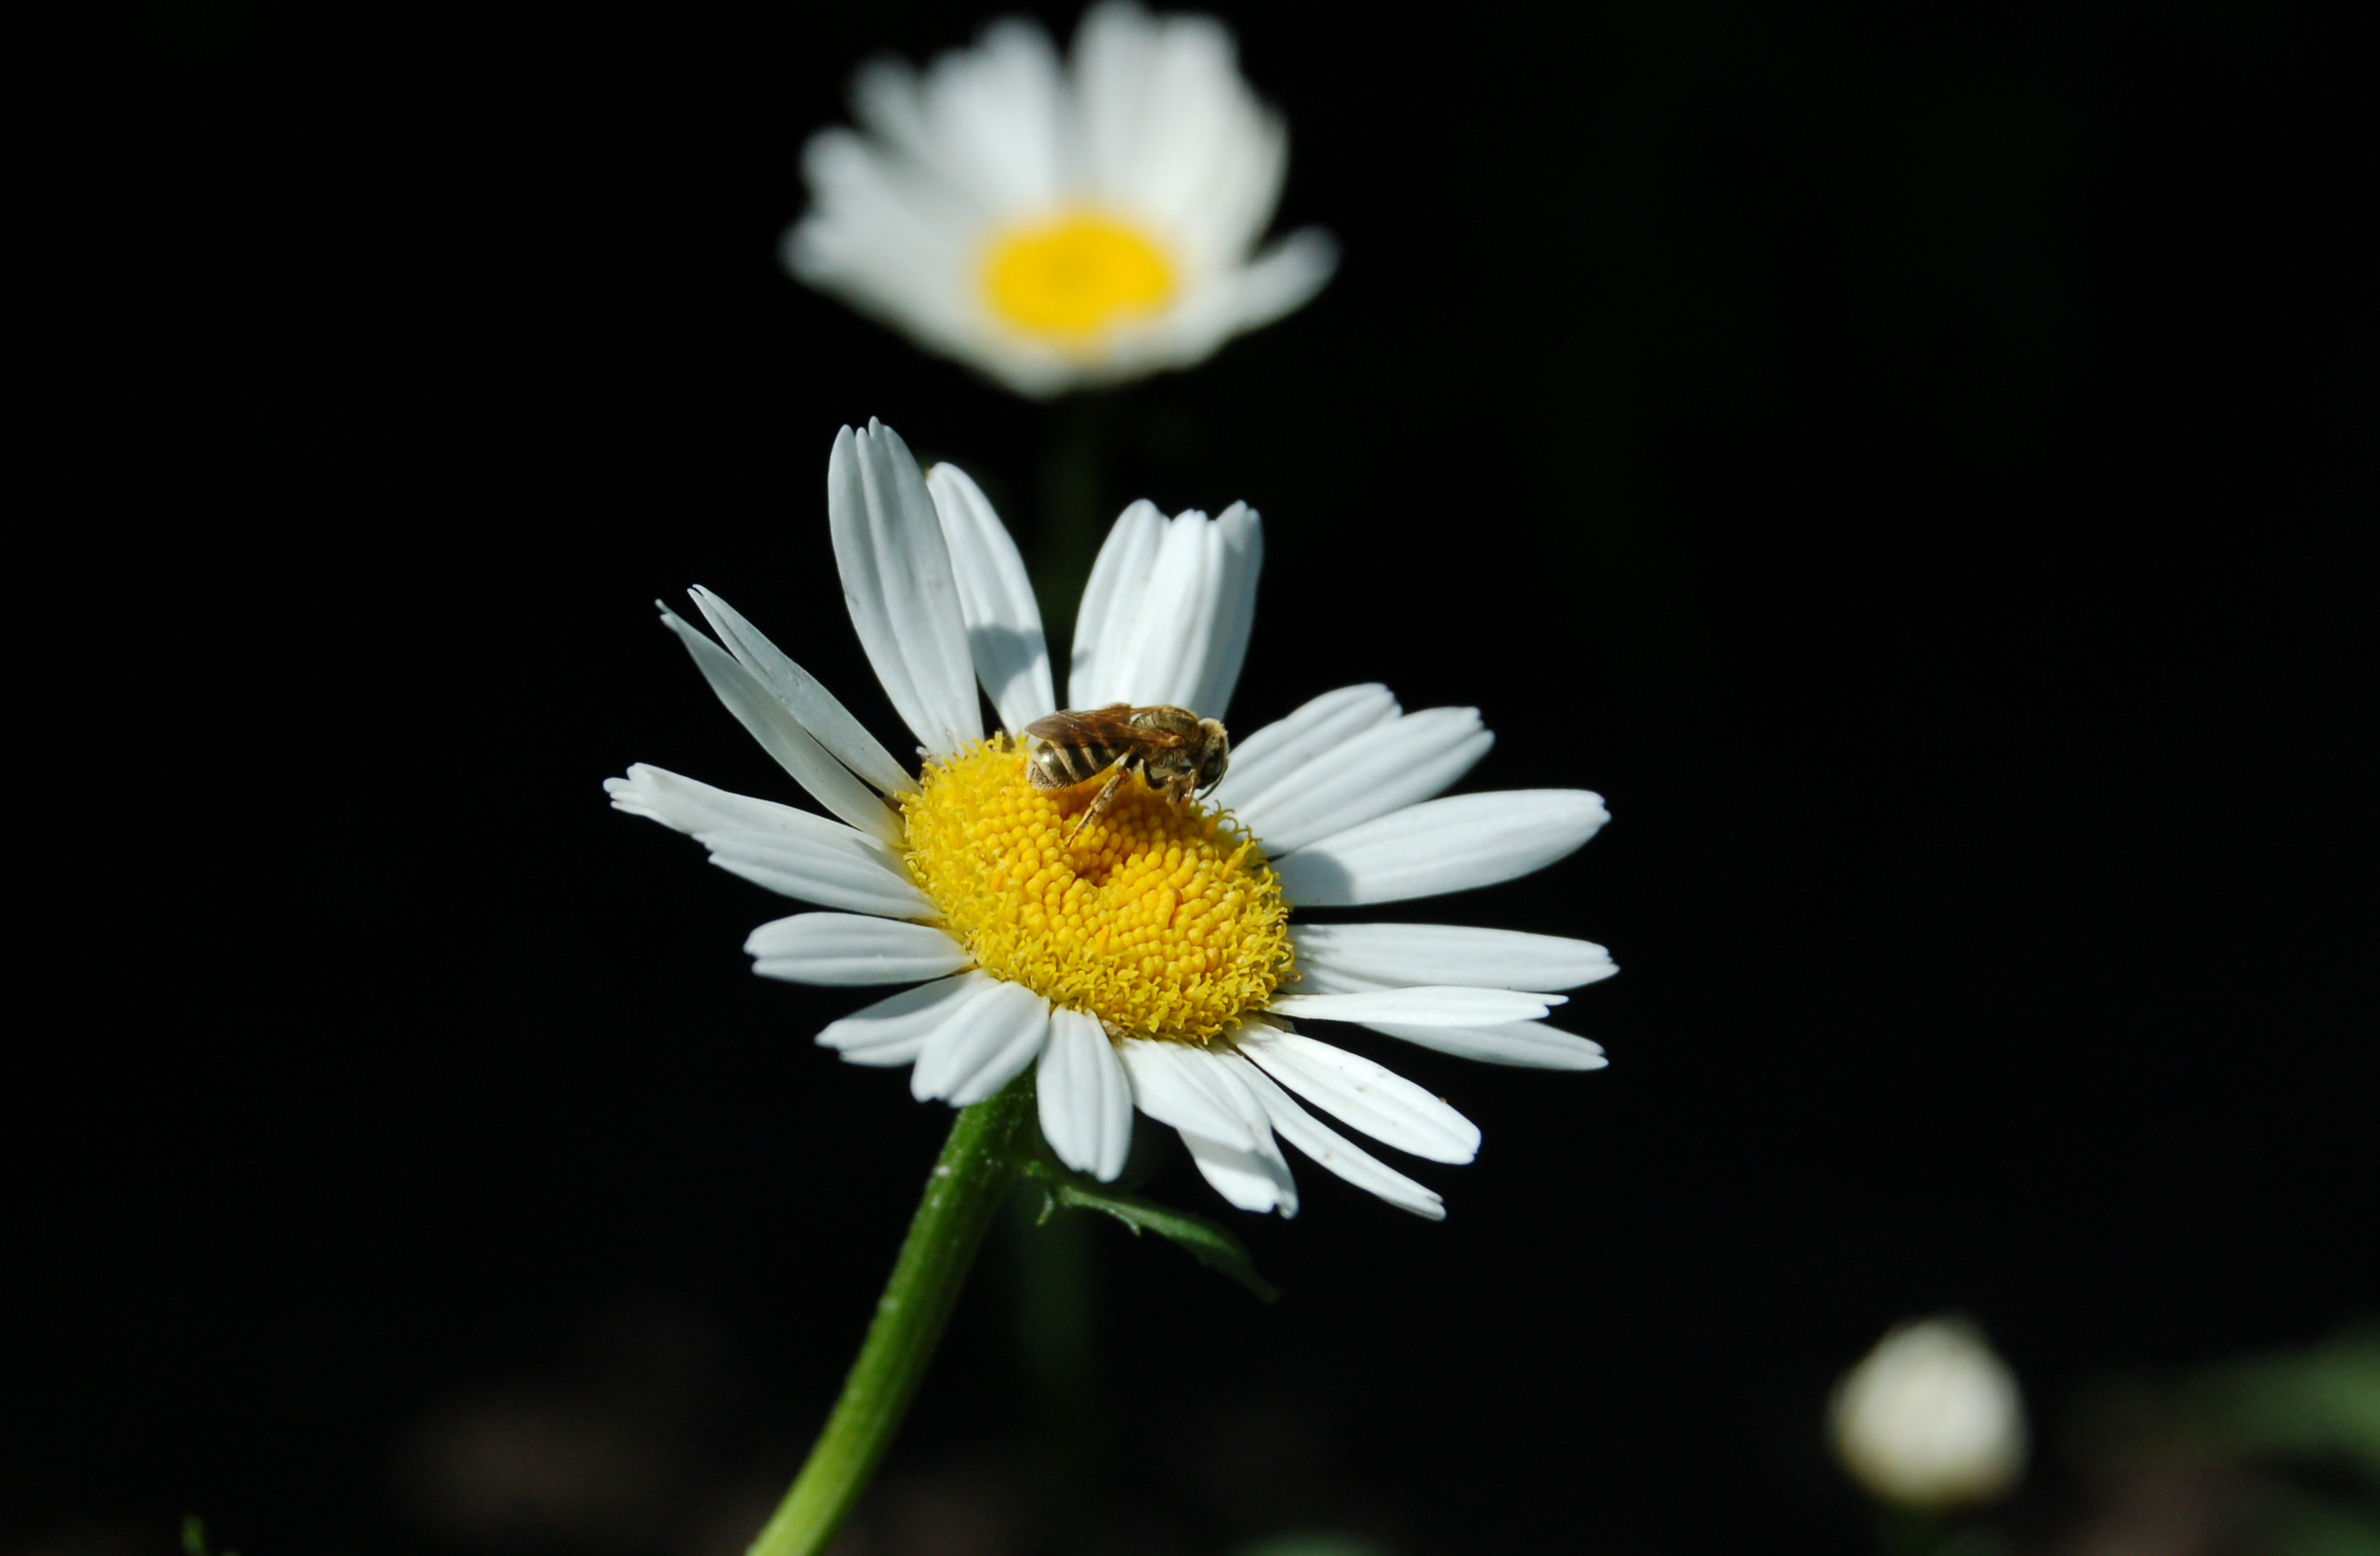 http://www.imgonline.com.ua/examples/bee-on-daisy.jpg